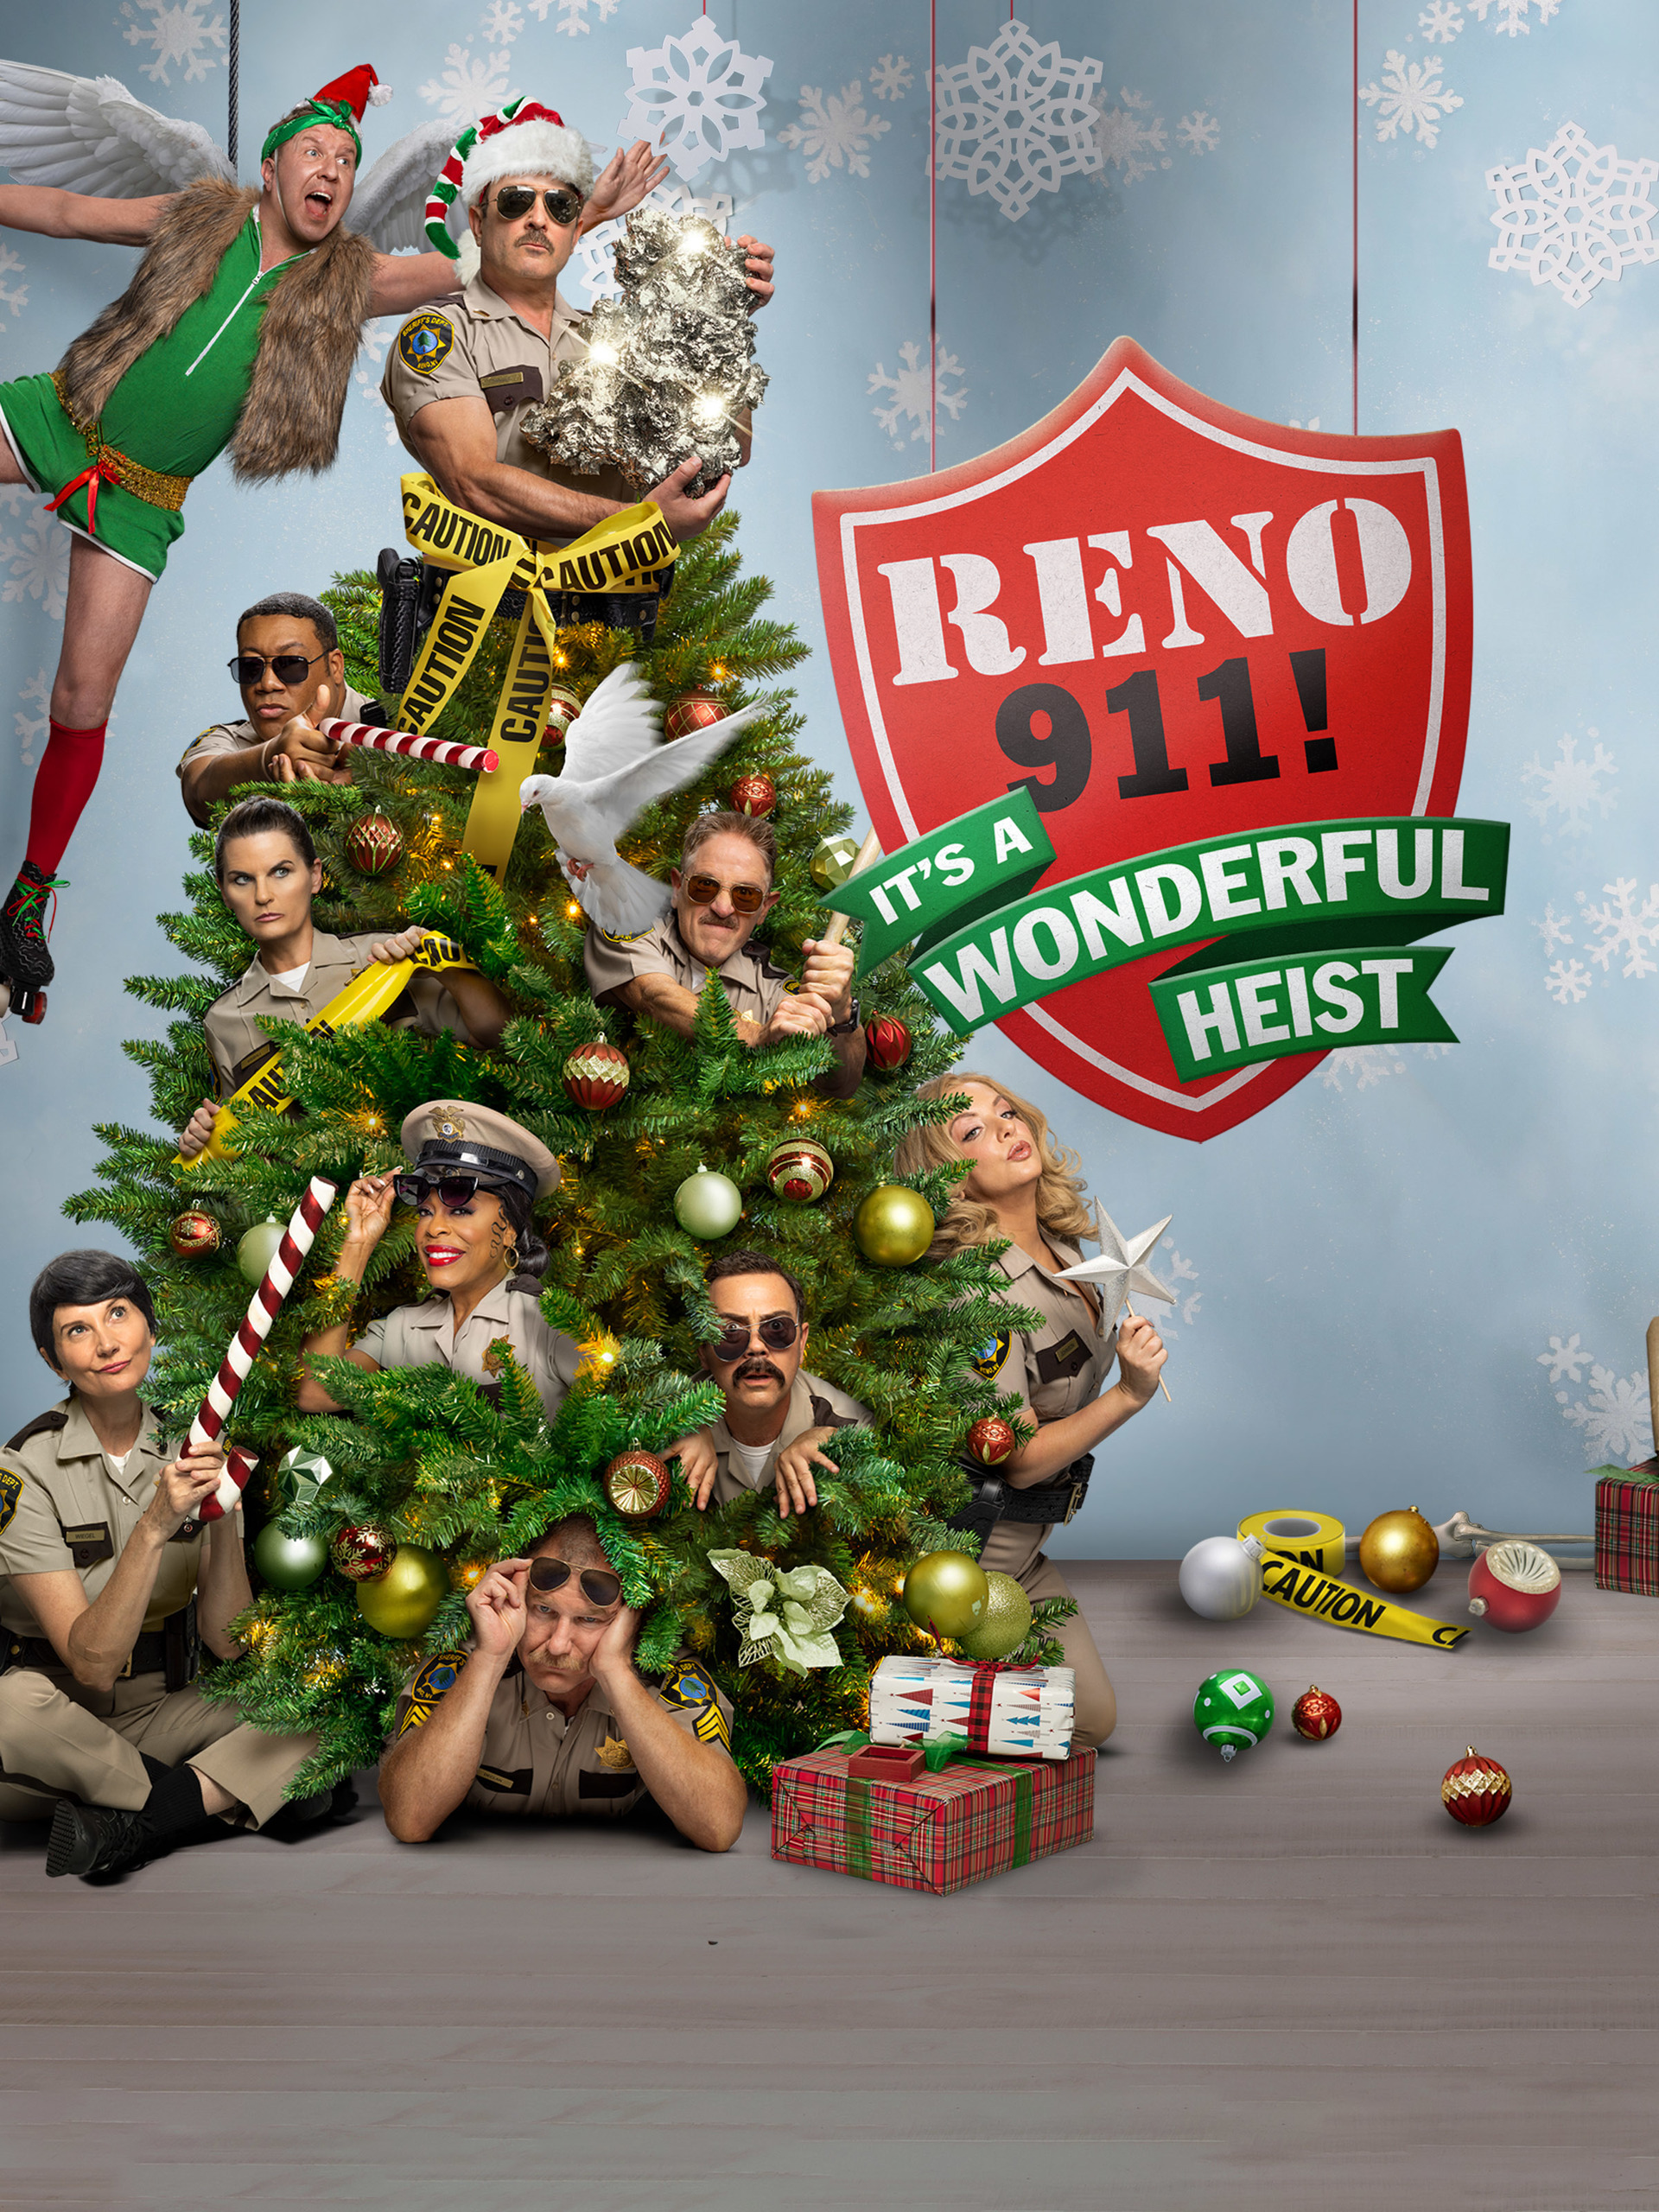 Reno 911 It's a Wonderful Heist Dublado Online